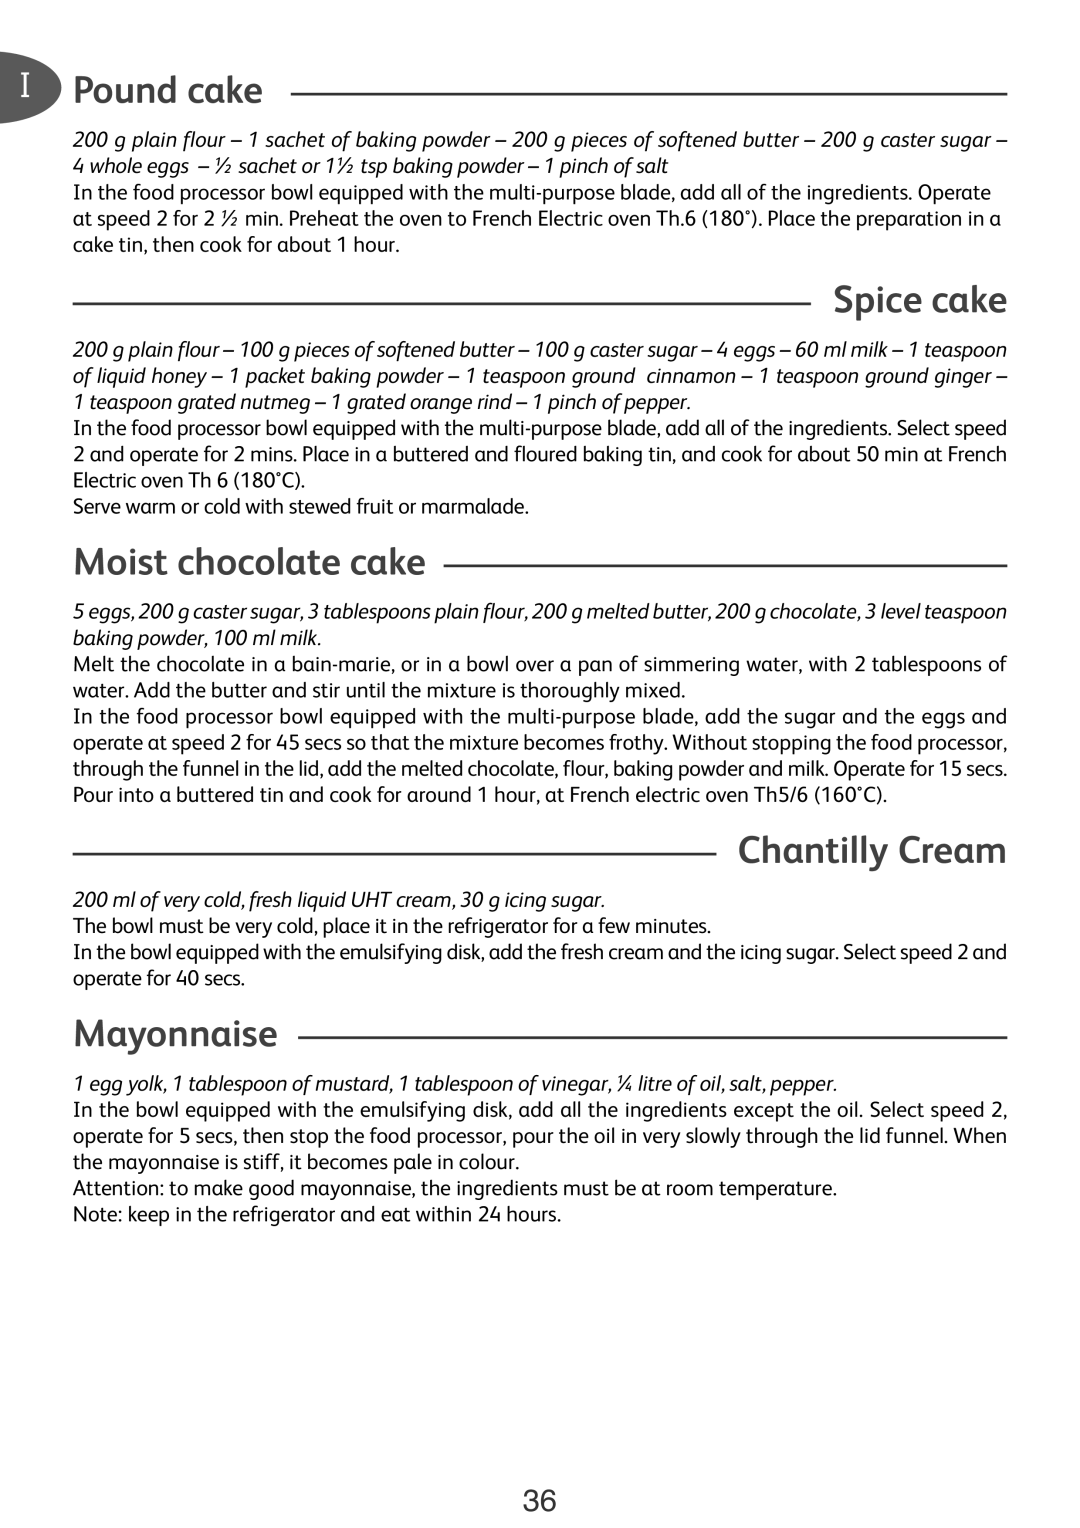 Tefal FP652DB7 manual I Pound cake, Spice cake, Moist chocolate cake, Chantilly Cream, bakingpowder,100mlmilk, Mayonnaise 